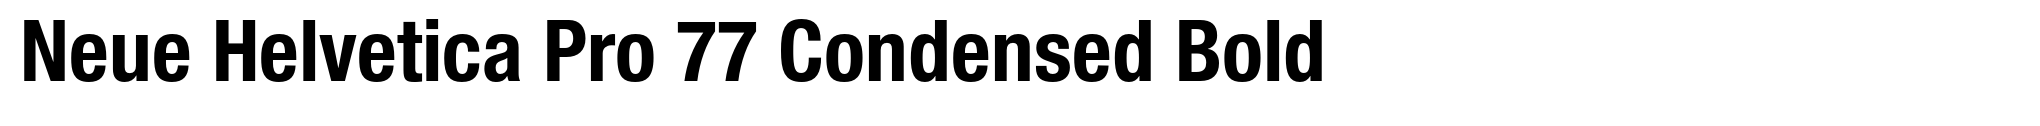 Neue Helvetica Pro 77 Condensed Bold image